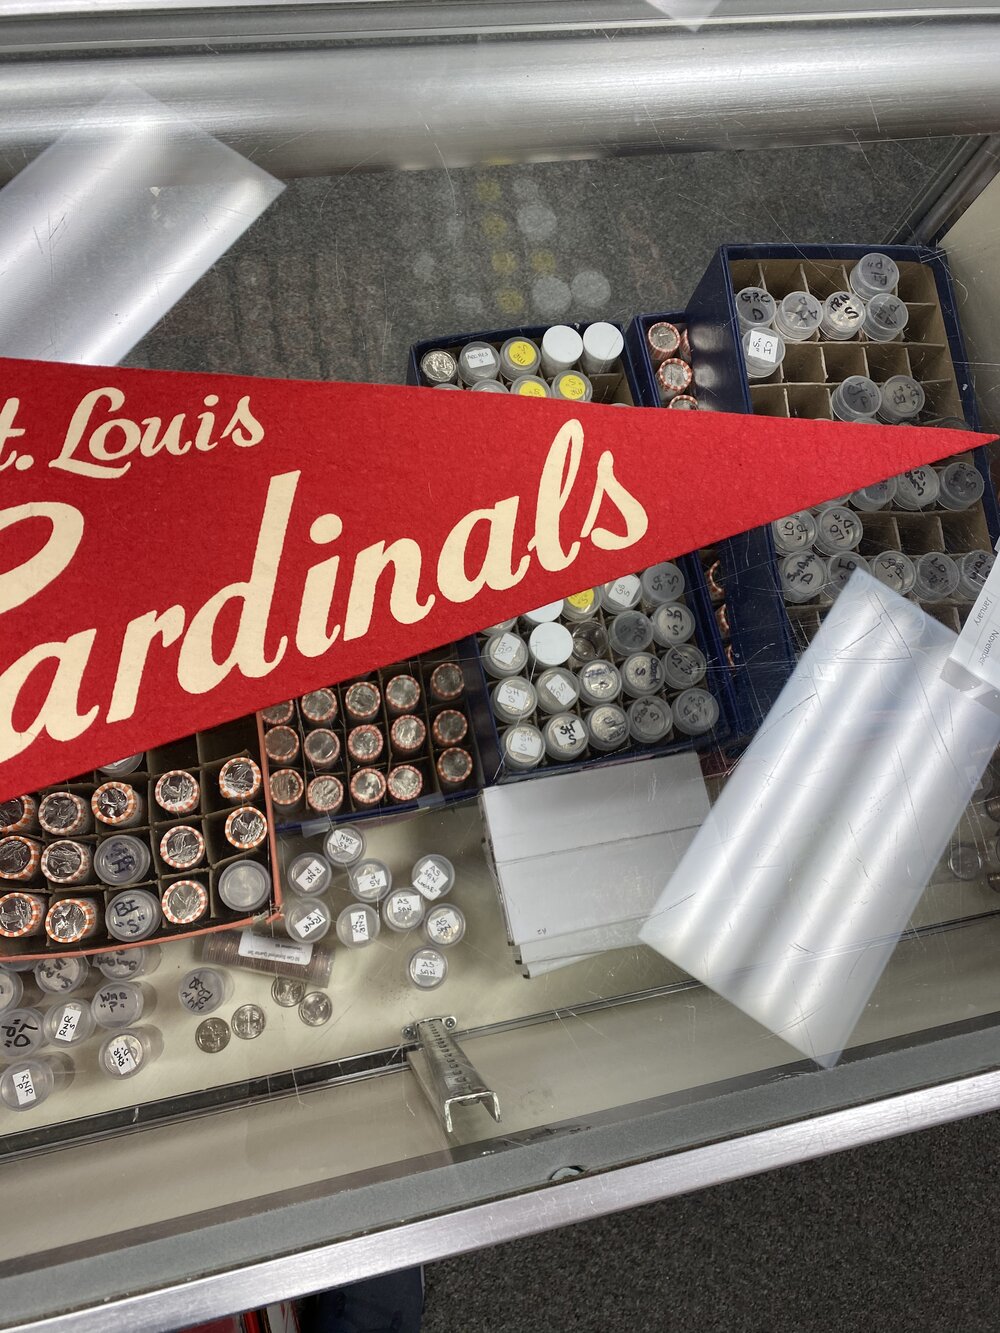 Buy St. Louis Cardinals Wool Pennant (Throwback Design)